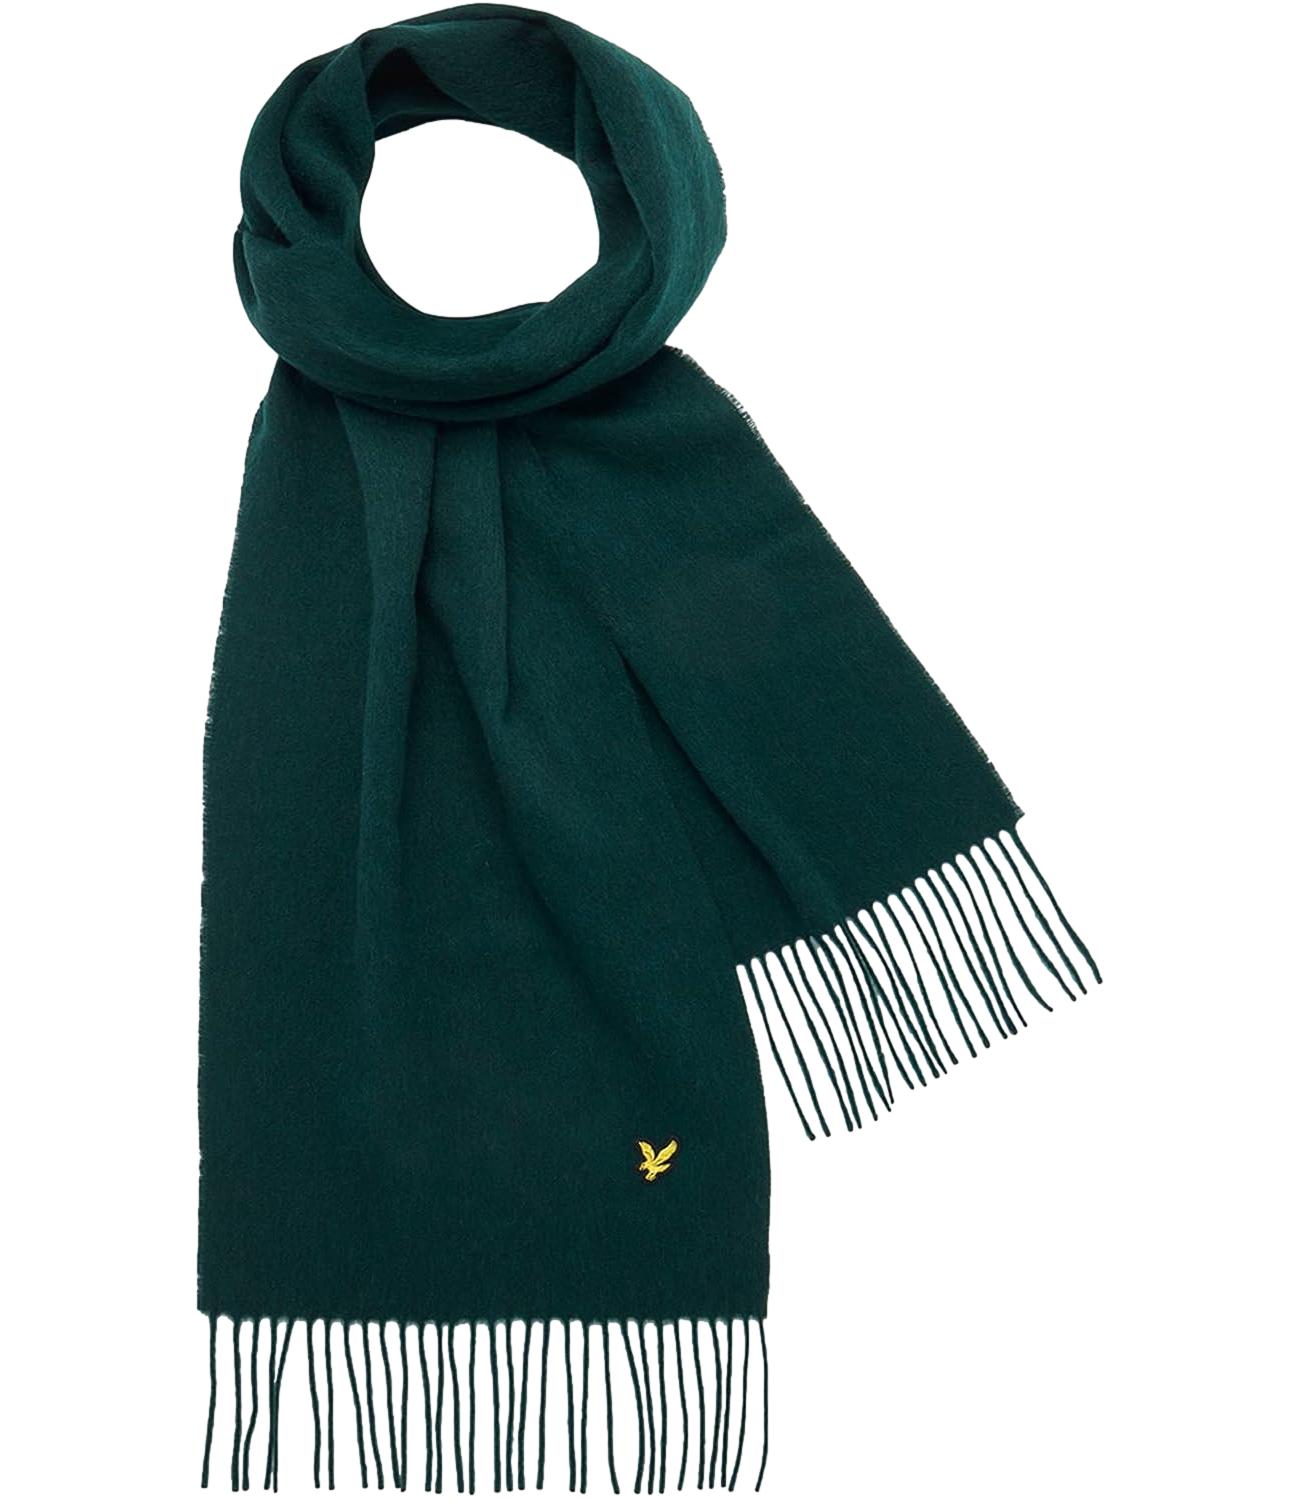 LYLE & SCOTT Sciarpa/Foulard Dark green Uomo lamsbwool scarf